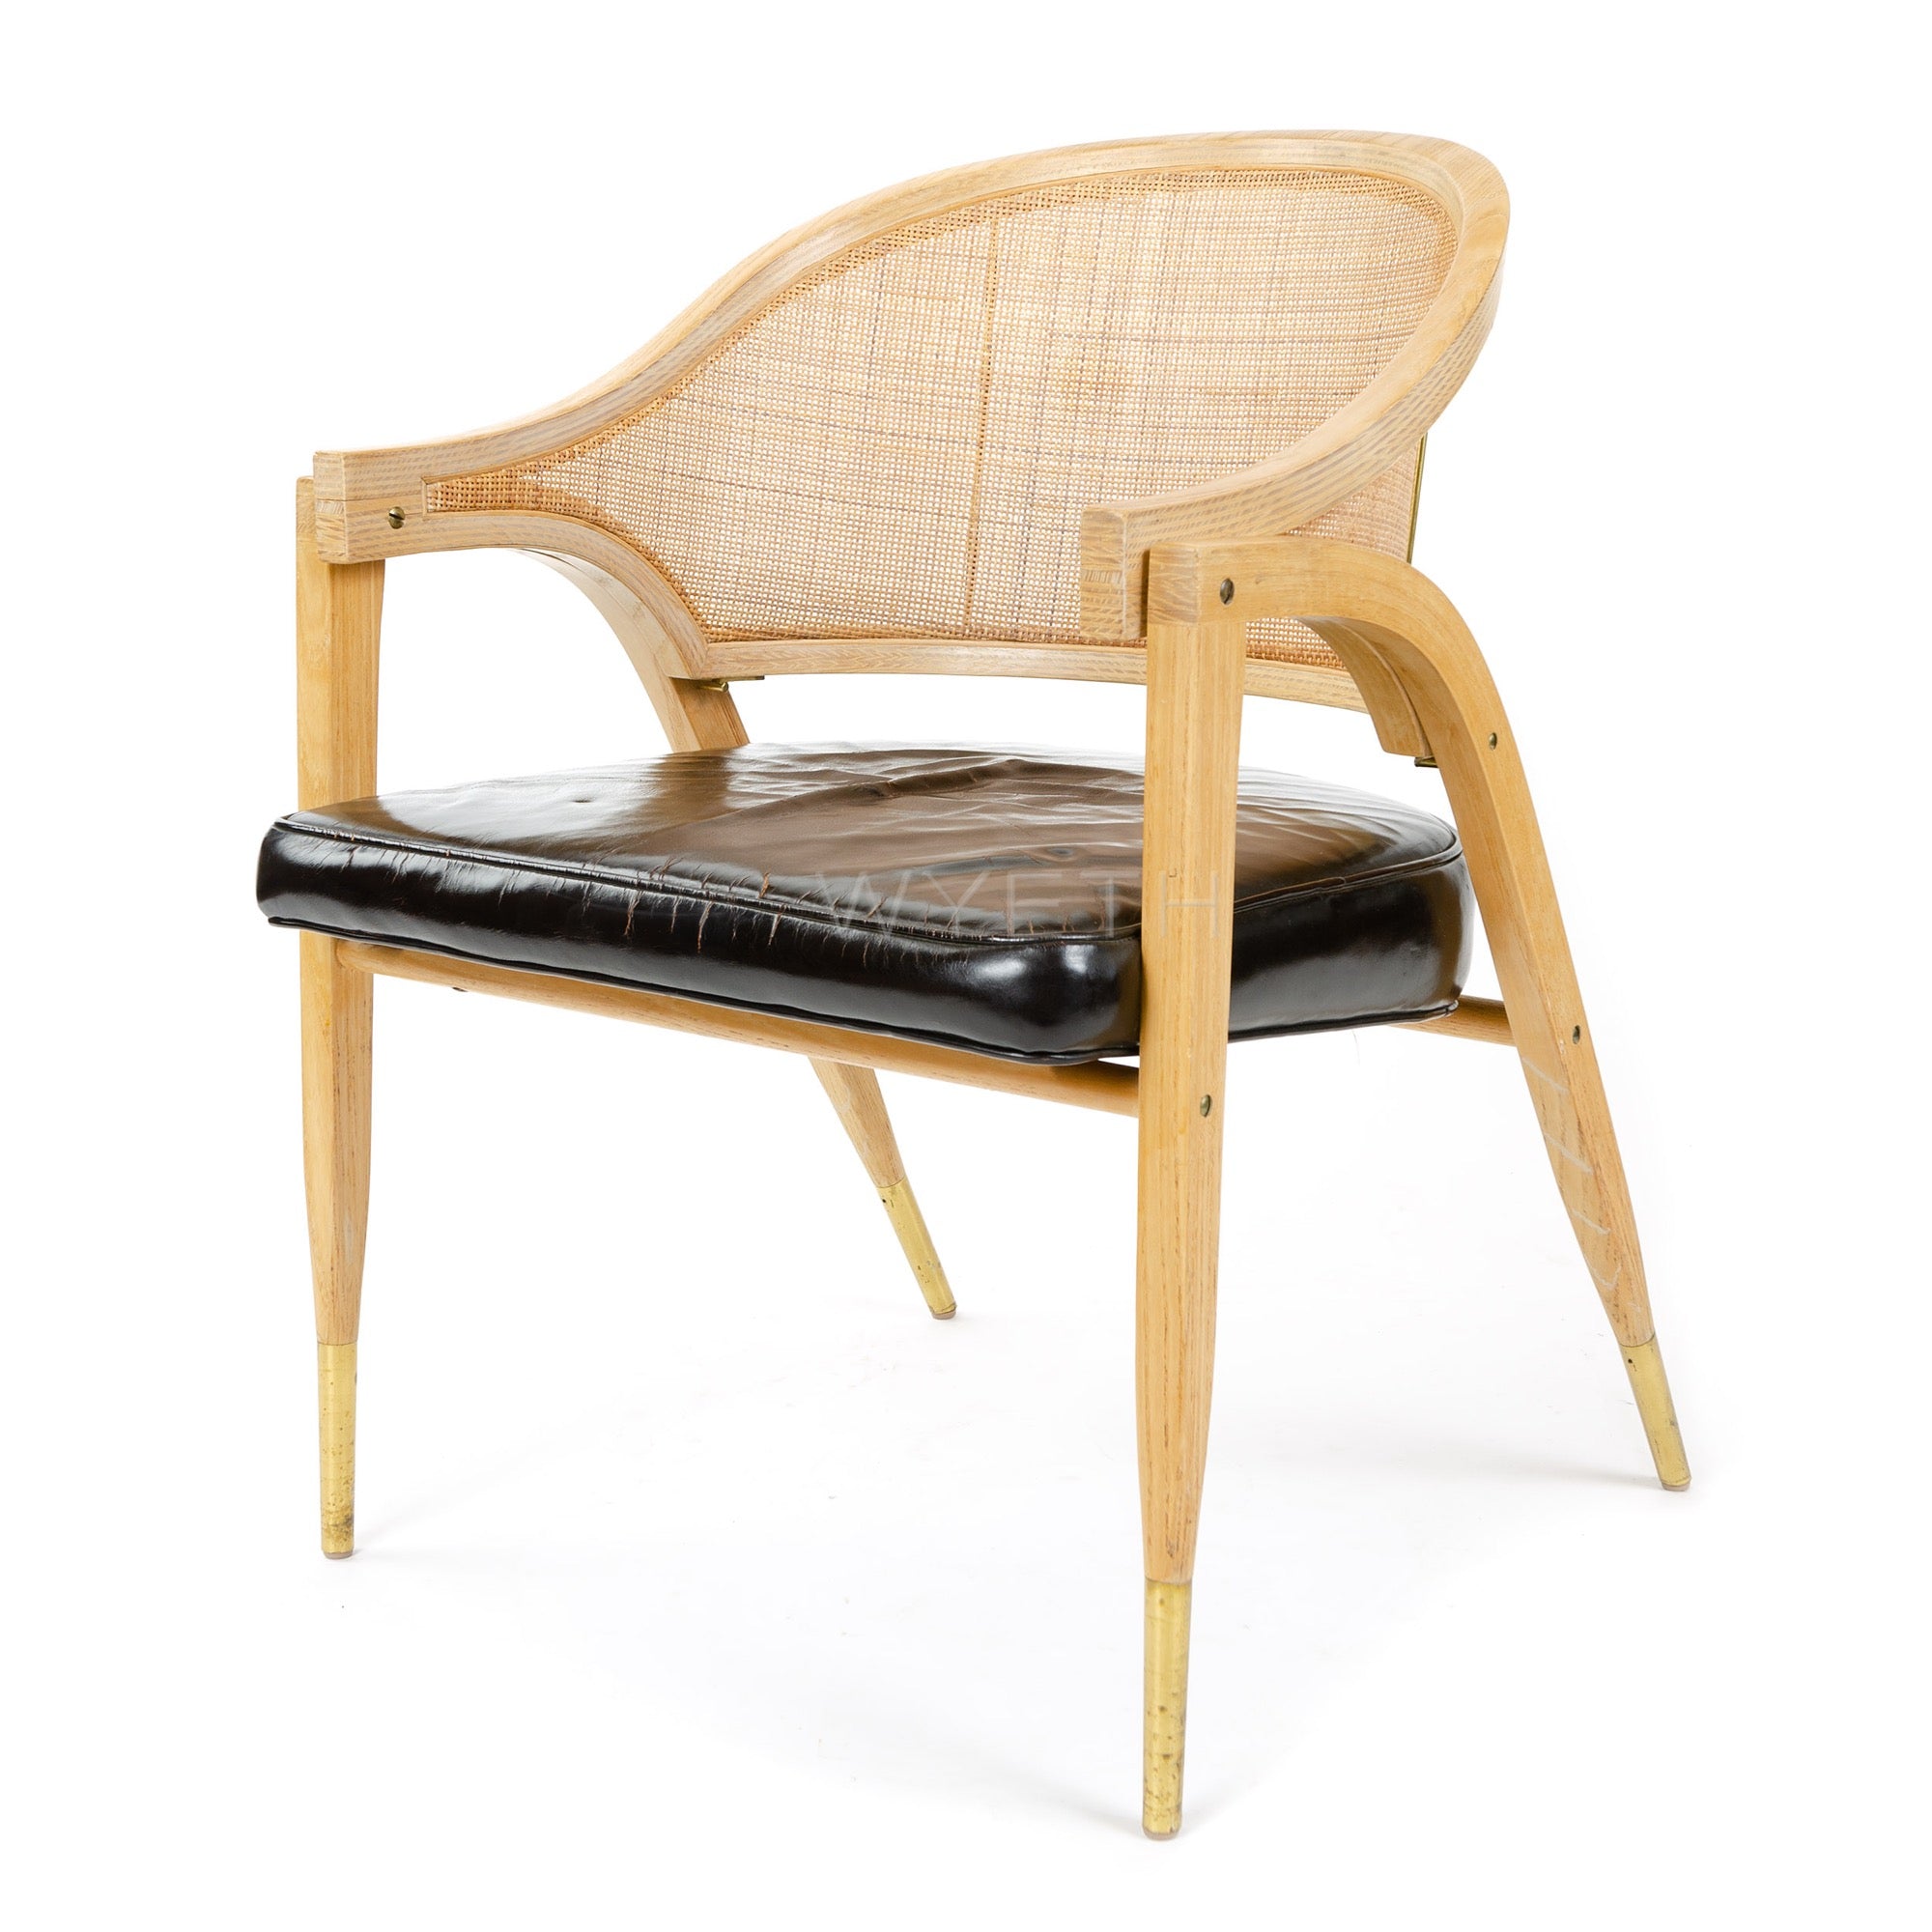 'A-Frame' Chair by Edward Wormley for Dunbar